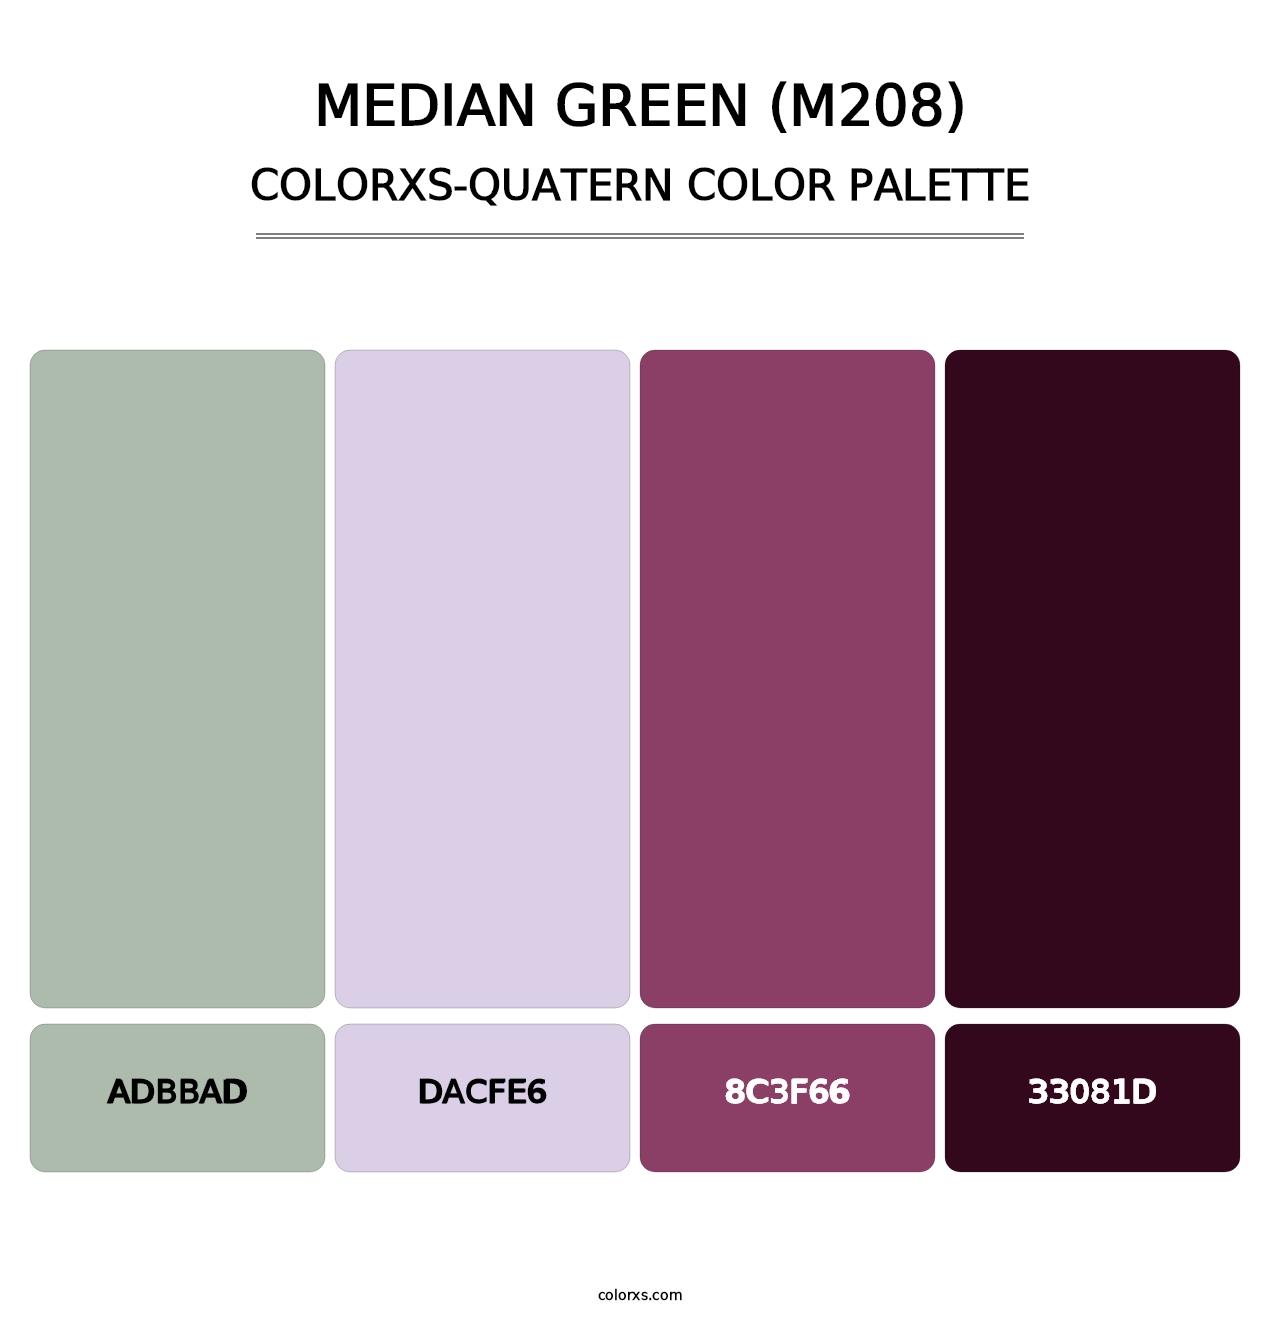 Median Green (M208) - Colorxs Quatern Palette